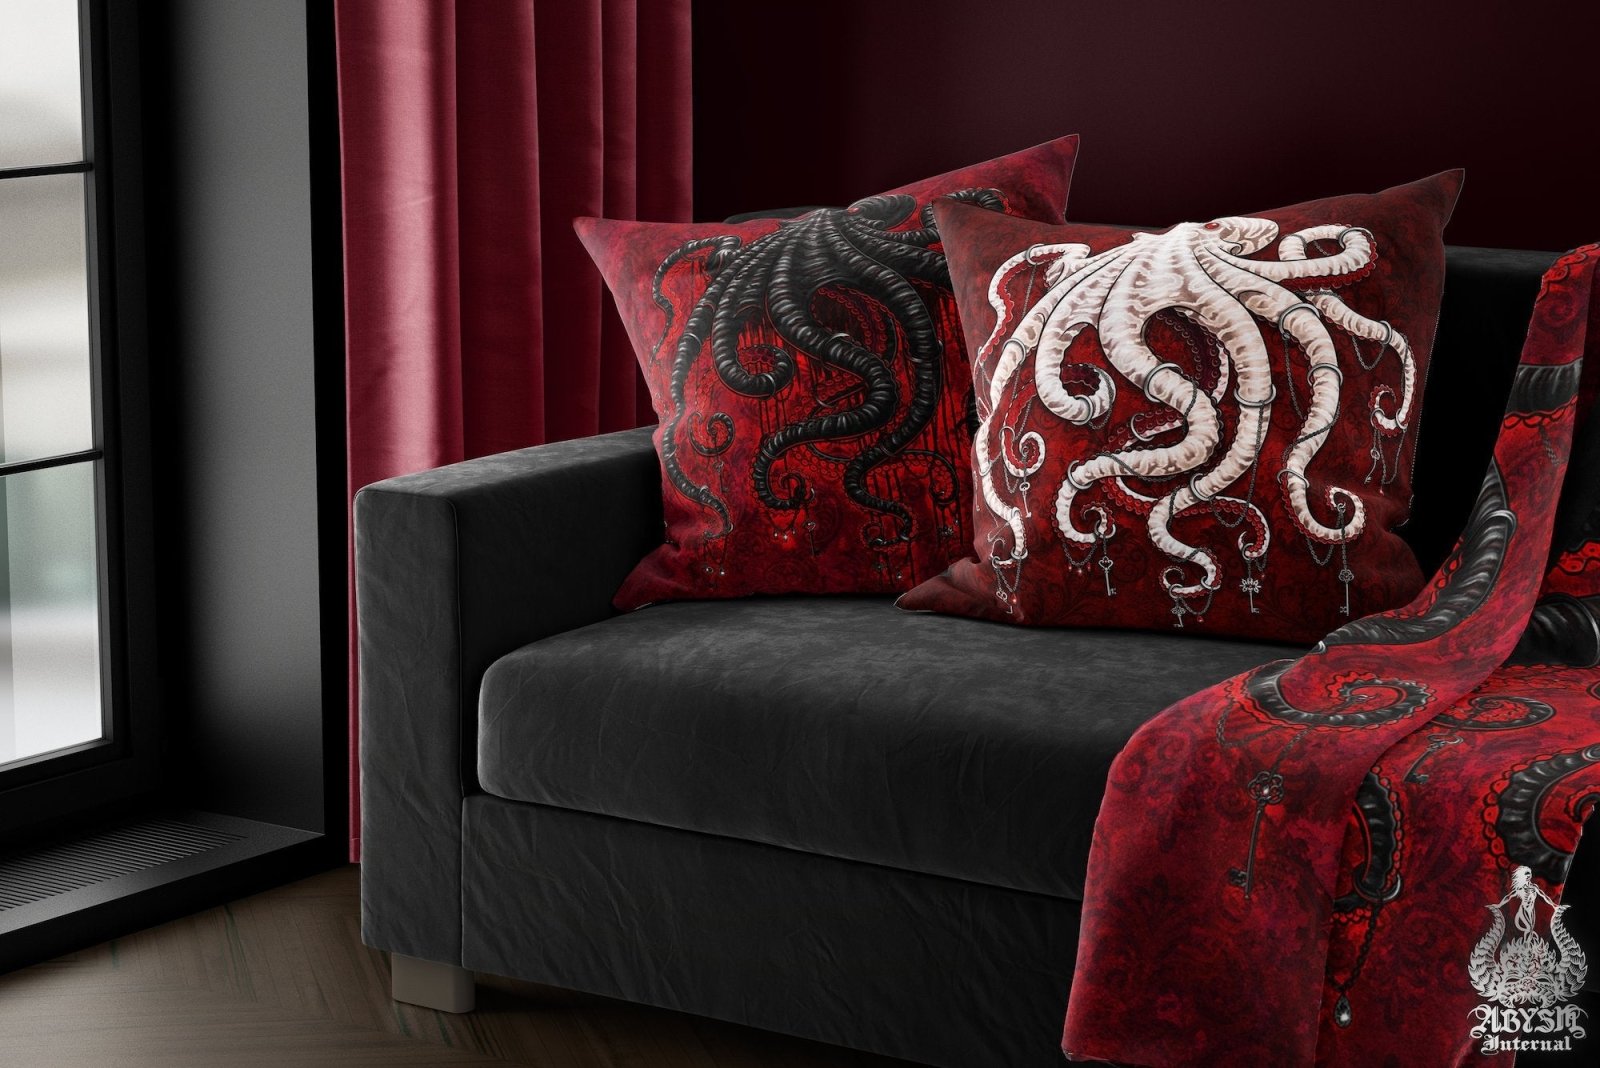 Gothic Throw Pillow, Decorative Accent Cushion, Goth Room Decor, Dark Art, Alternative Home - Bloody Black Octopus - Abysm Internal